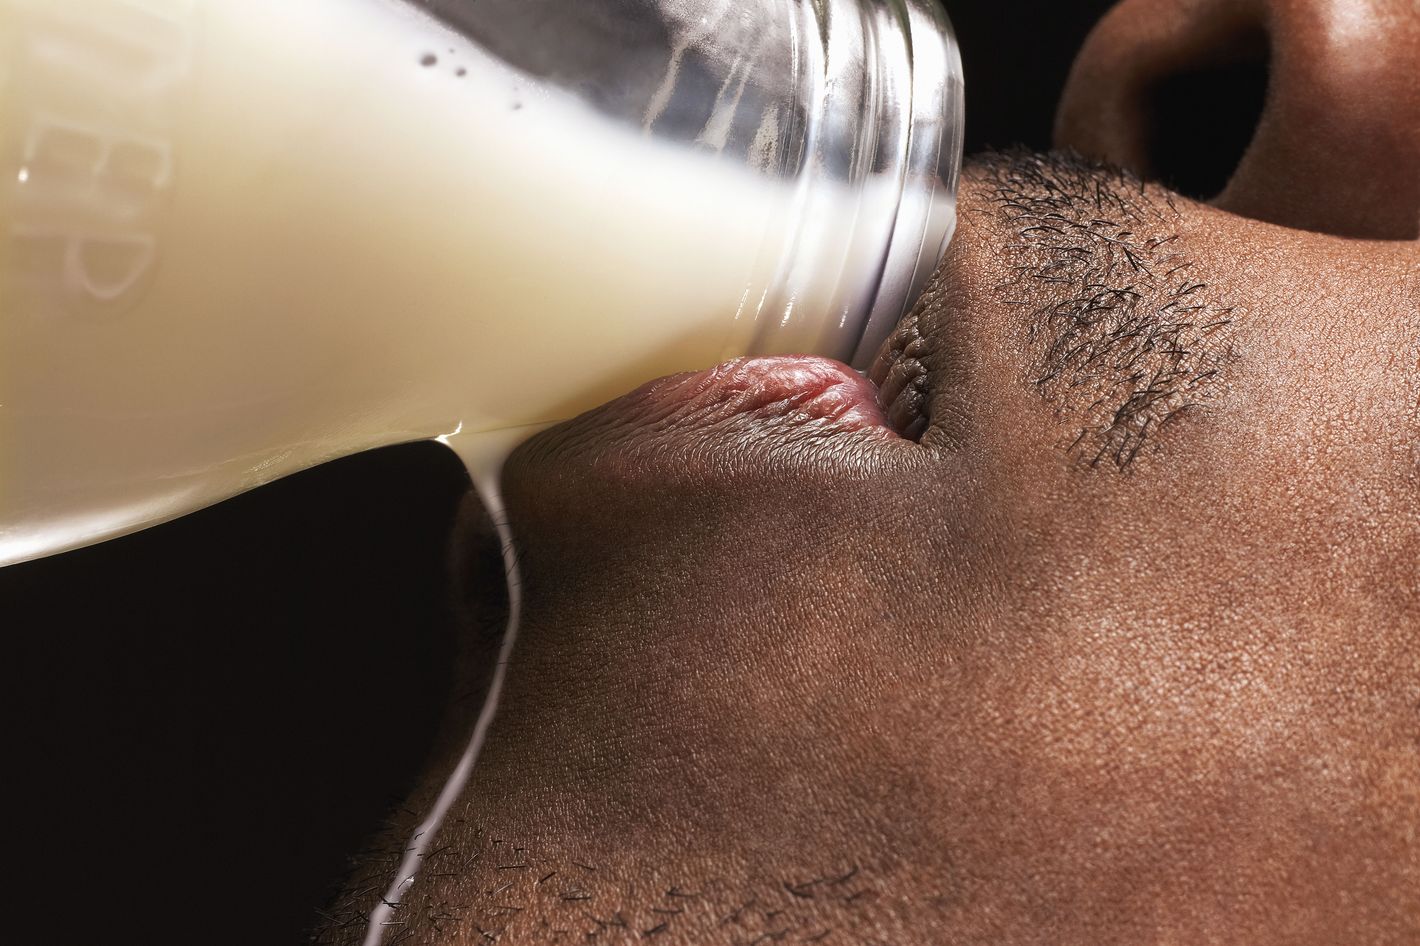 Meet the Men Who Drink Breast Milk